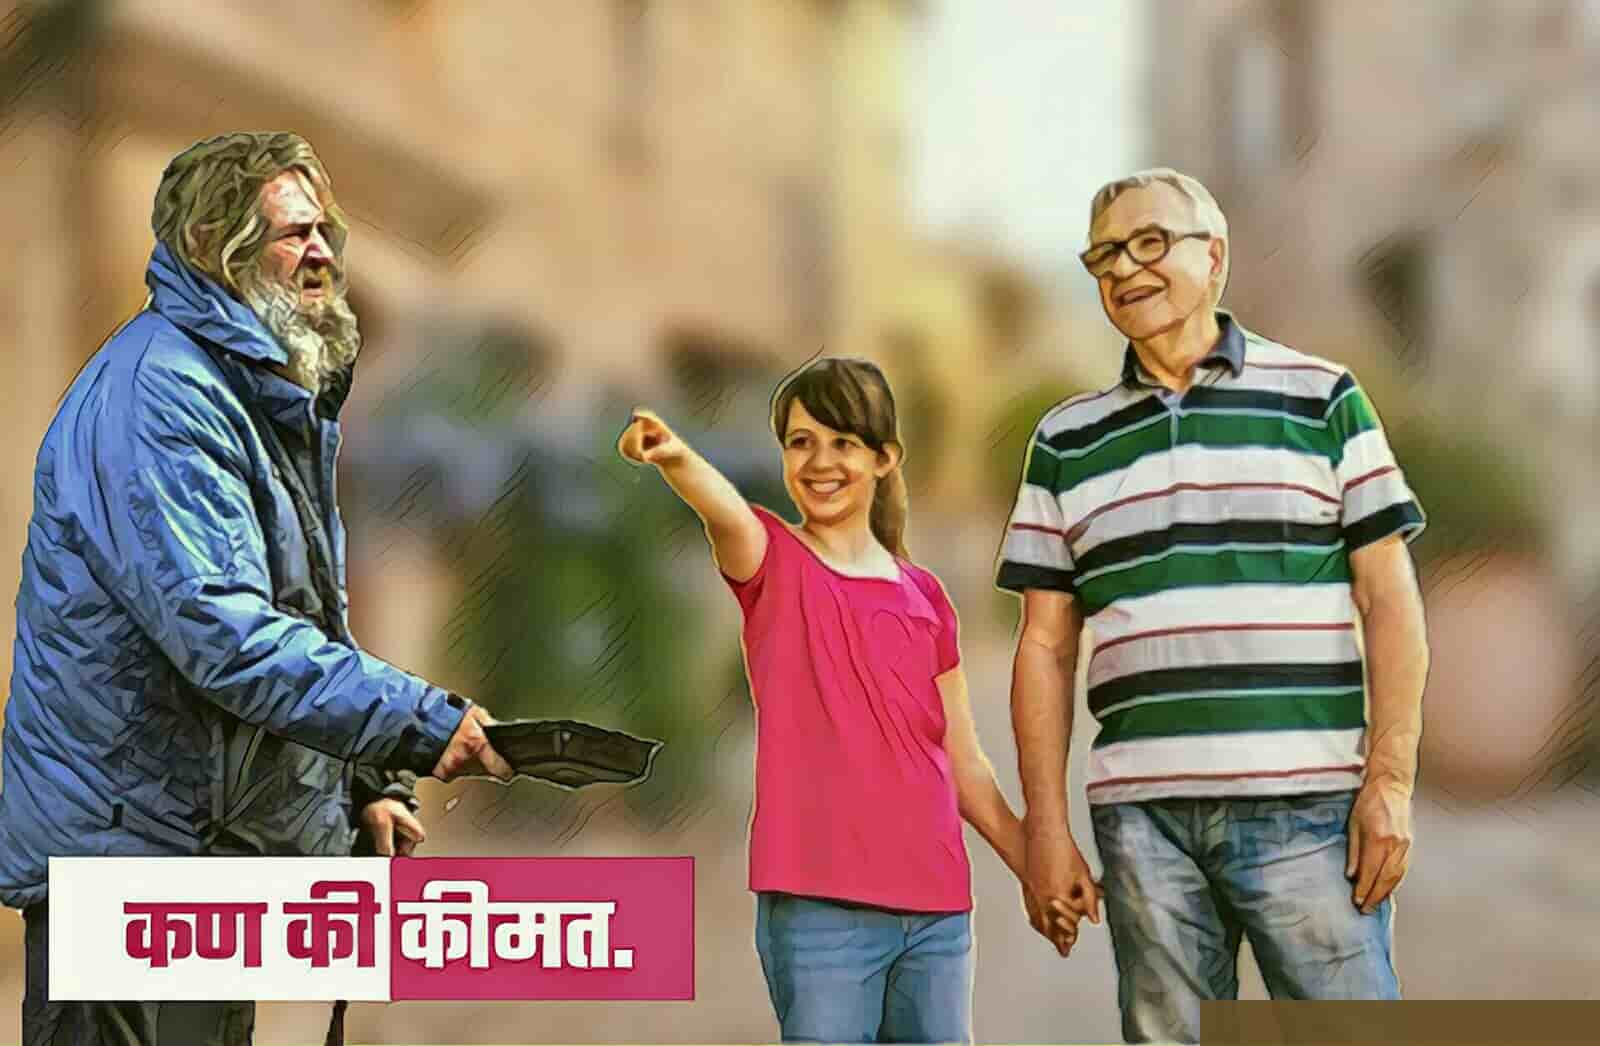 Story in Hindi Moral । Motivational Short Story in Hindi, Moral story in hindi, father and daughter